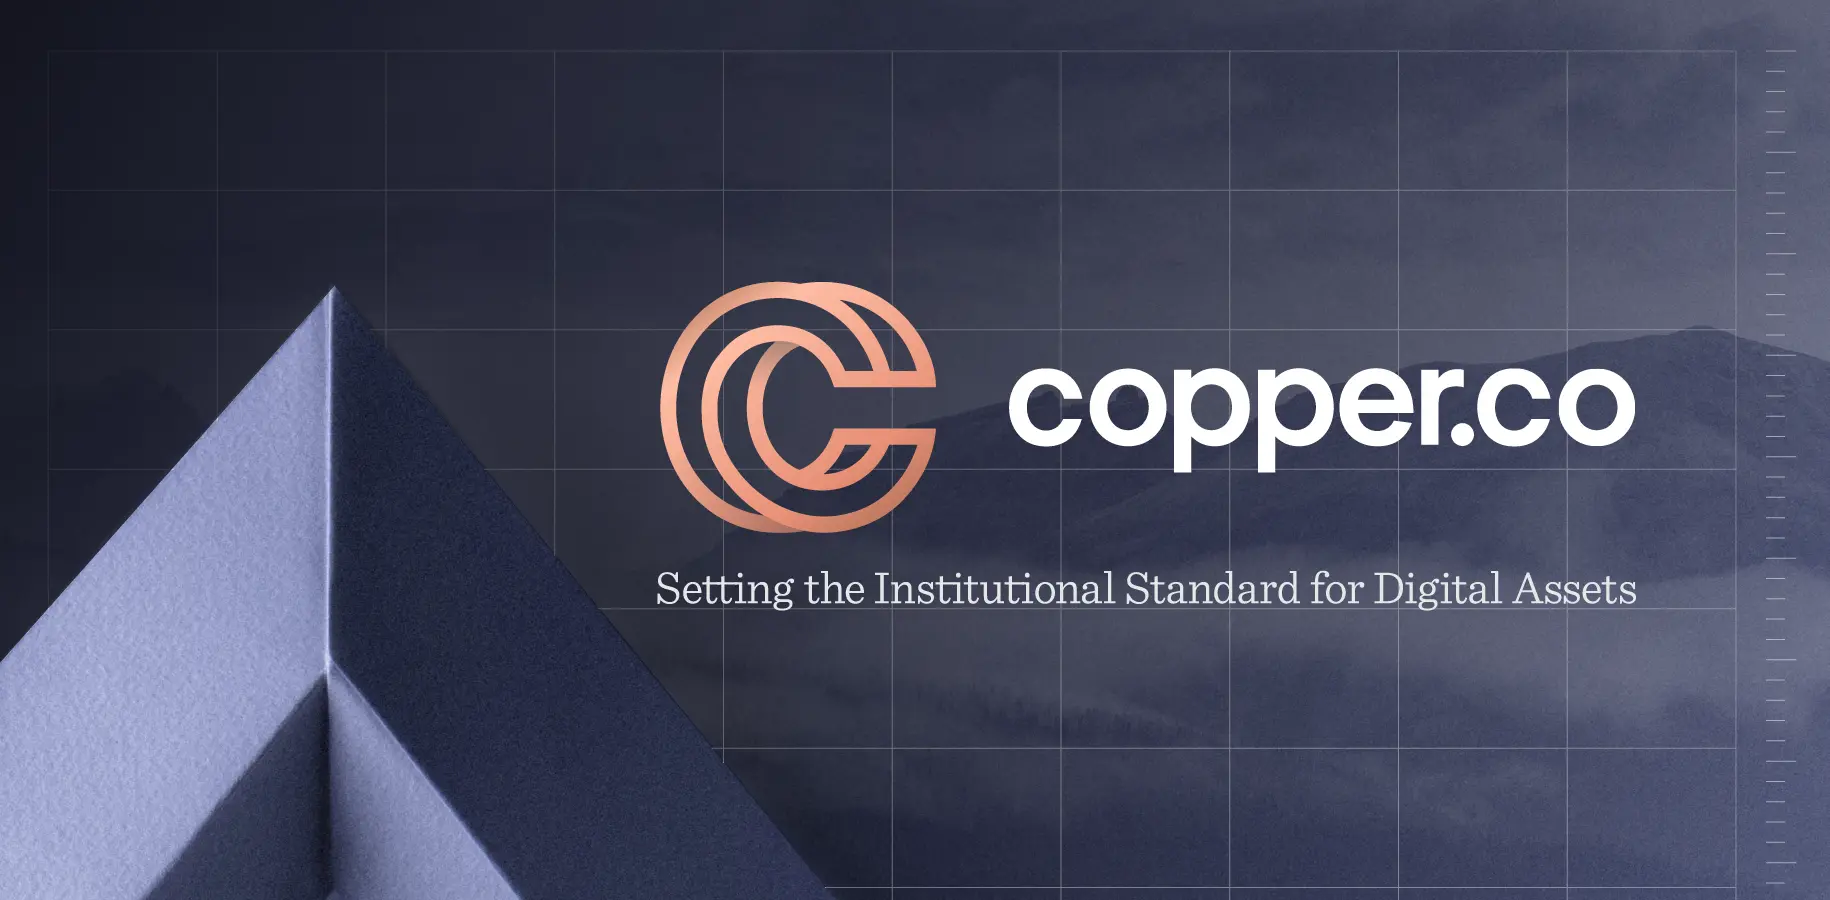 Copper.co setting standard image